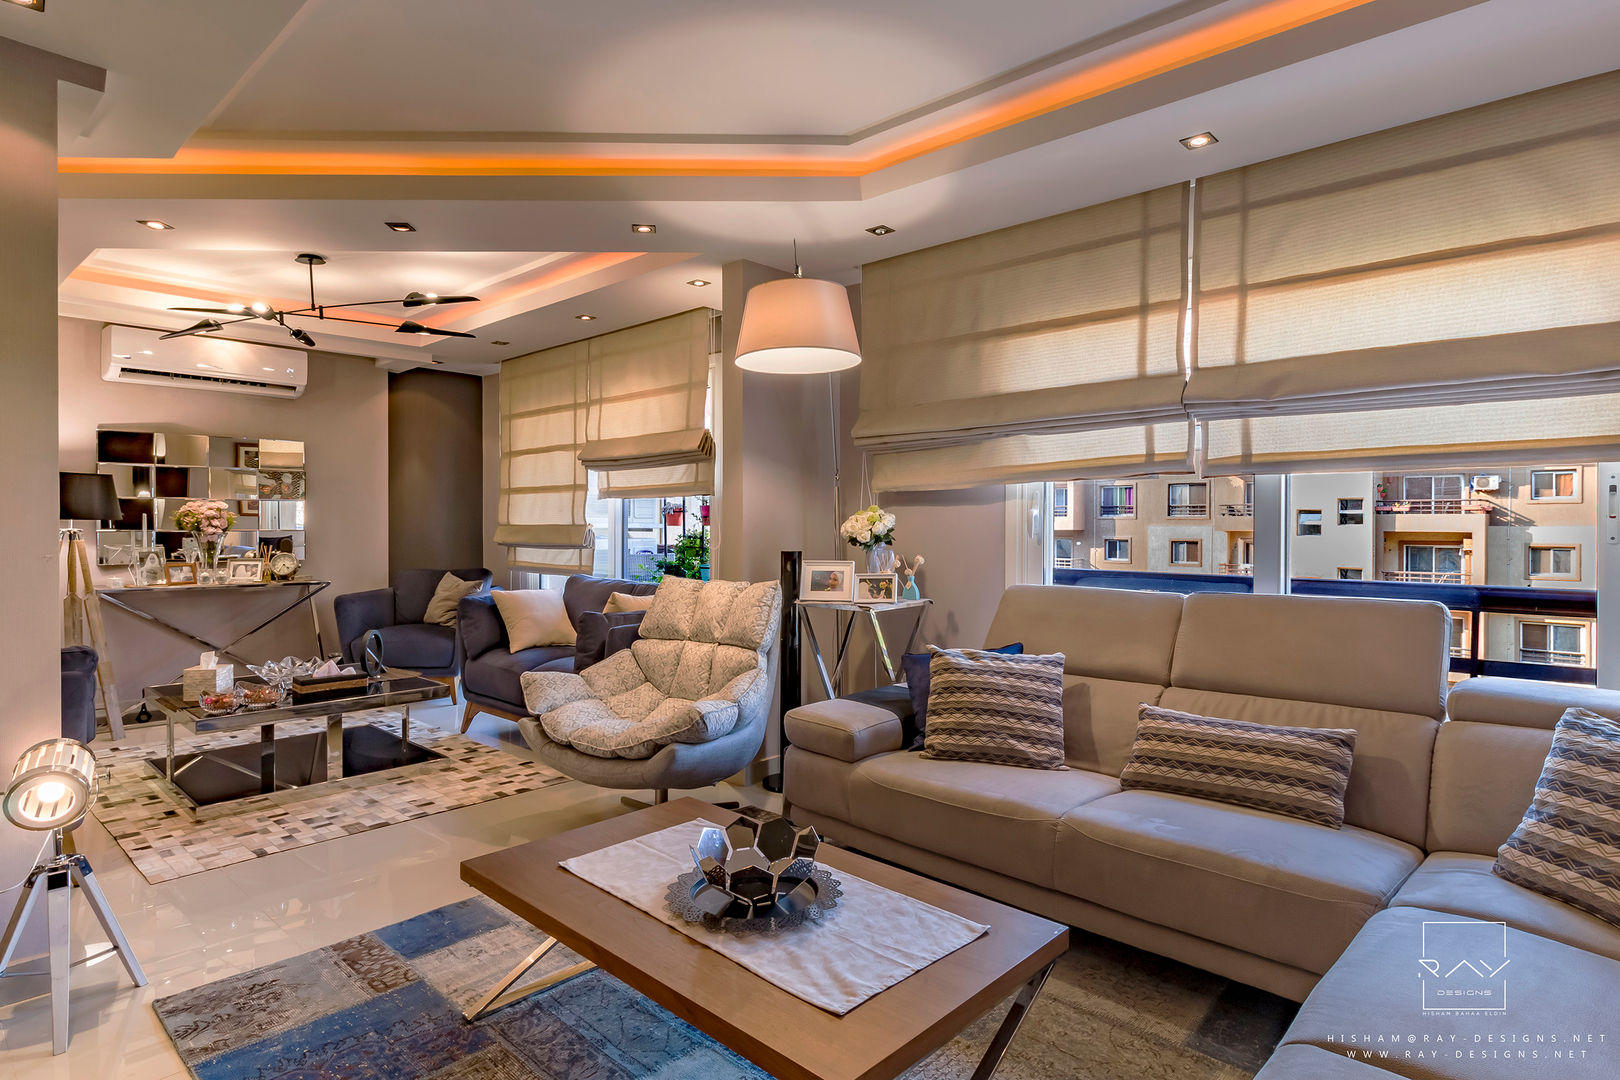 living room reception by raydesigns RayDesigns Salas modernas